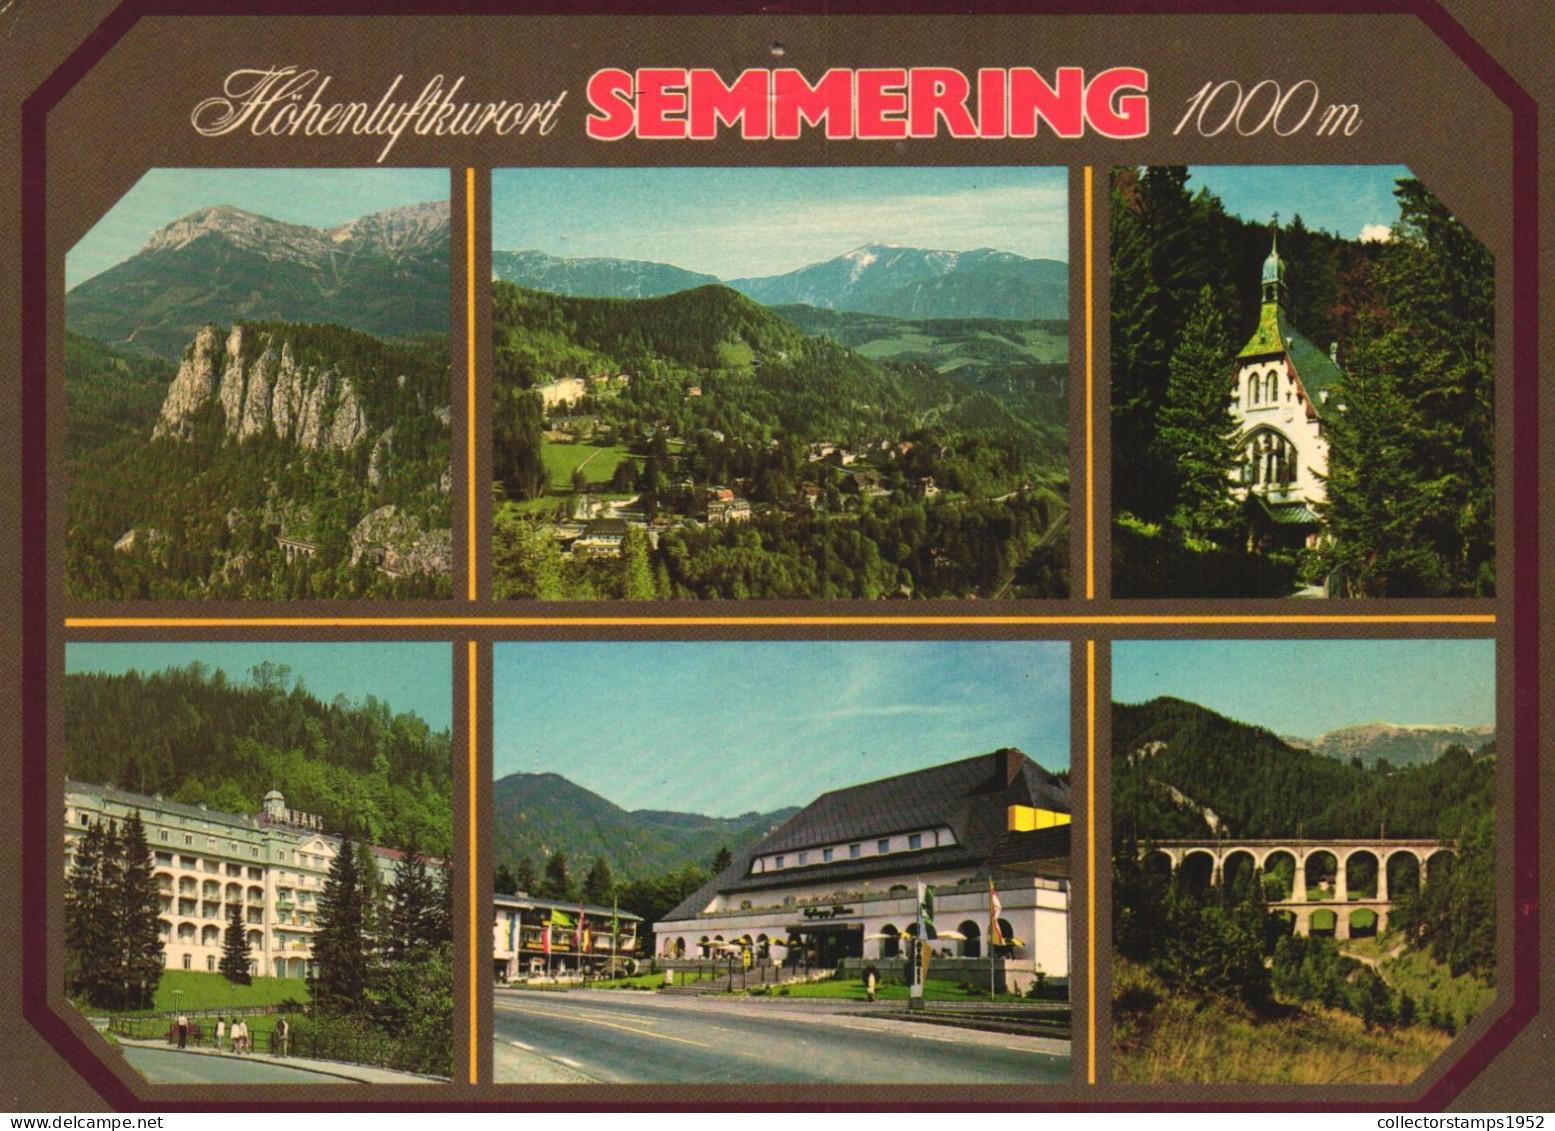 SEMMERING, MULTIPLE VIEWS, ARCHITECTURE, MOUNTAIN, FLAGS, BRIDGE, HOTEL, AUSTRIA - Semmering